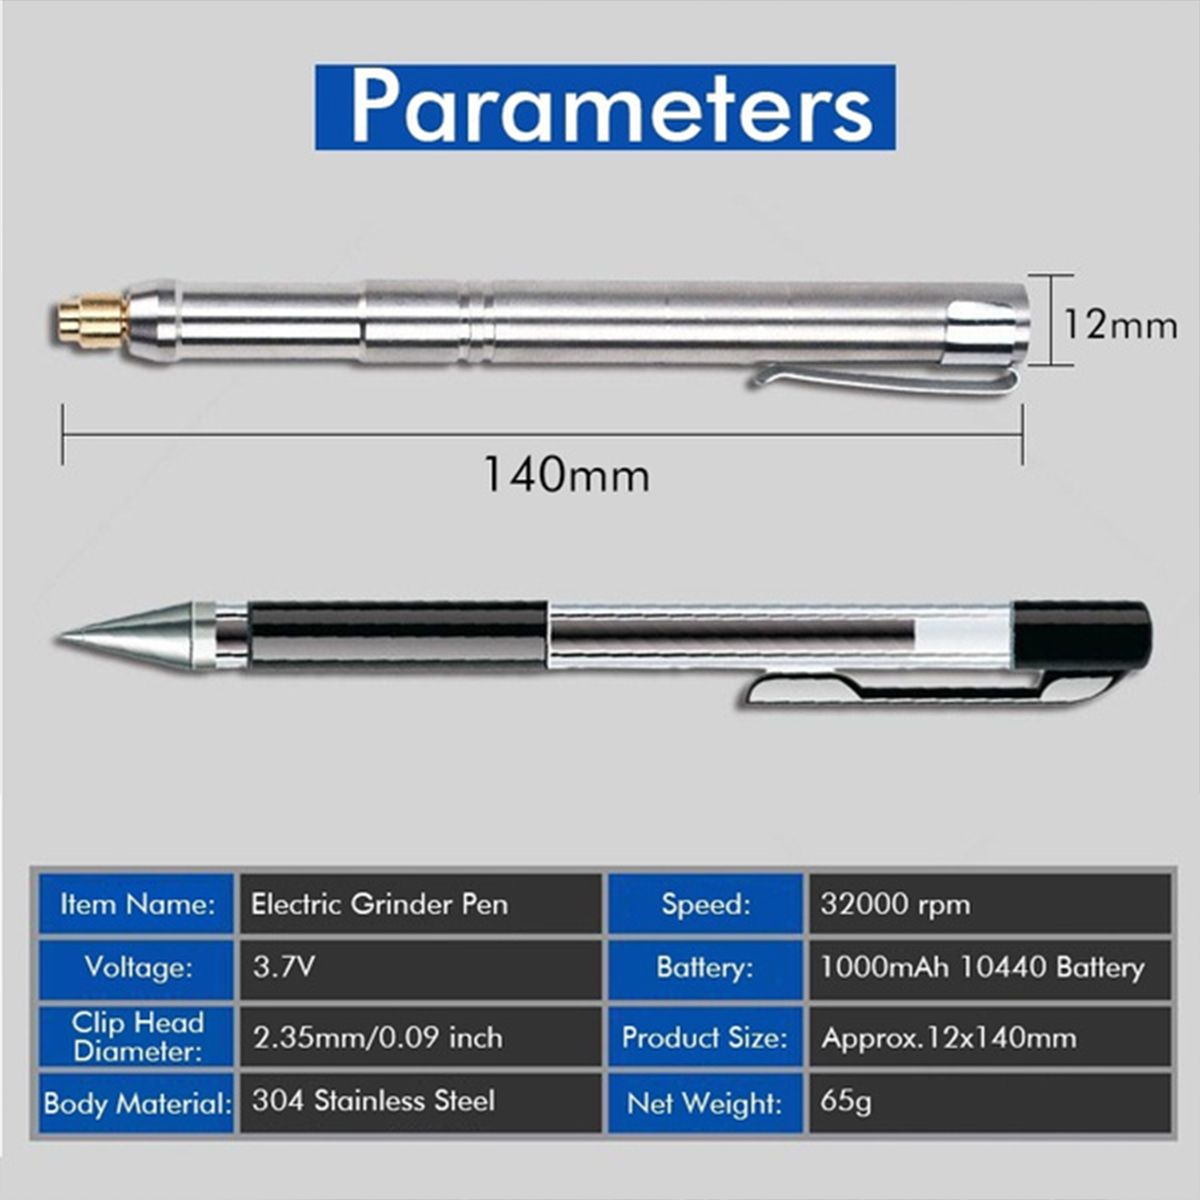 60W-32000RPM-Mini-Cordless-Electric-Grinder-Pen-Jewelry-Engraving-Pen-Sander-Polisher-DIY-Engraver-C-1762451